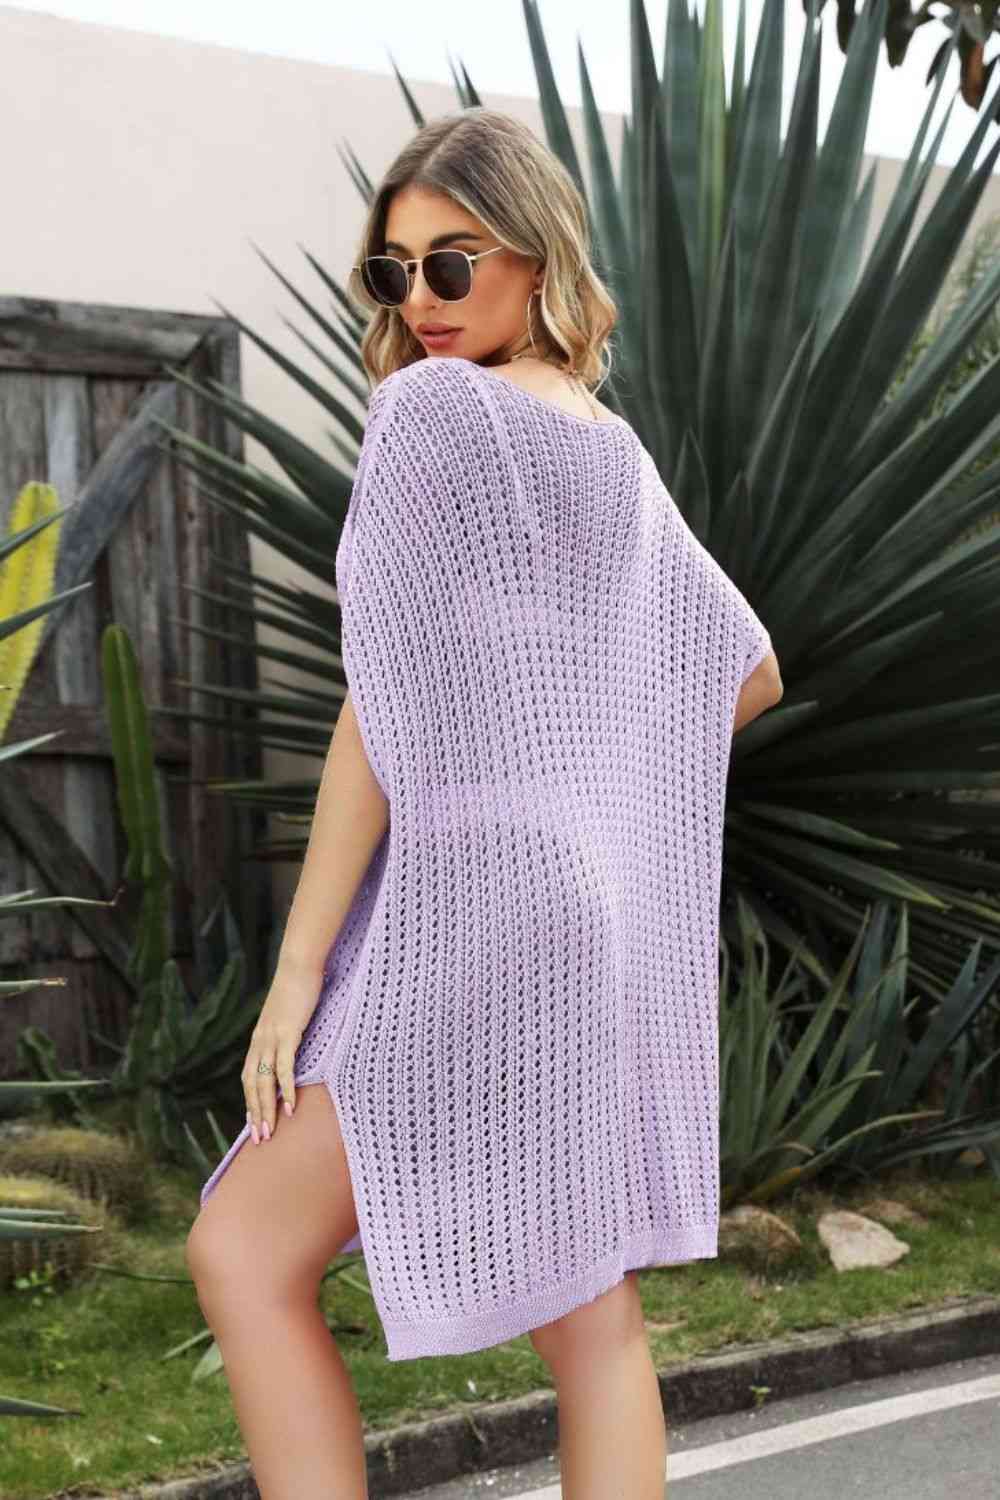 Trendsi Lavender / One Size Openwork Side Slit Cover-Up Dress 100100482380212 Apparel & Accessories > Clothing > Dresses